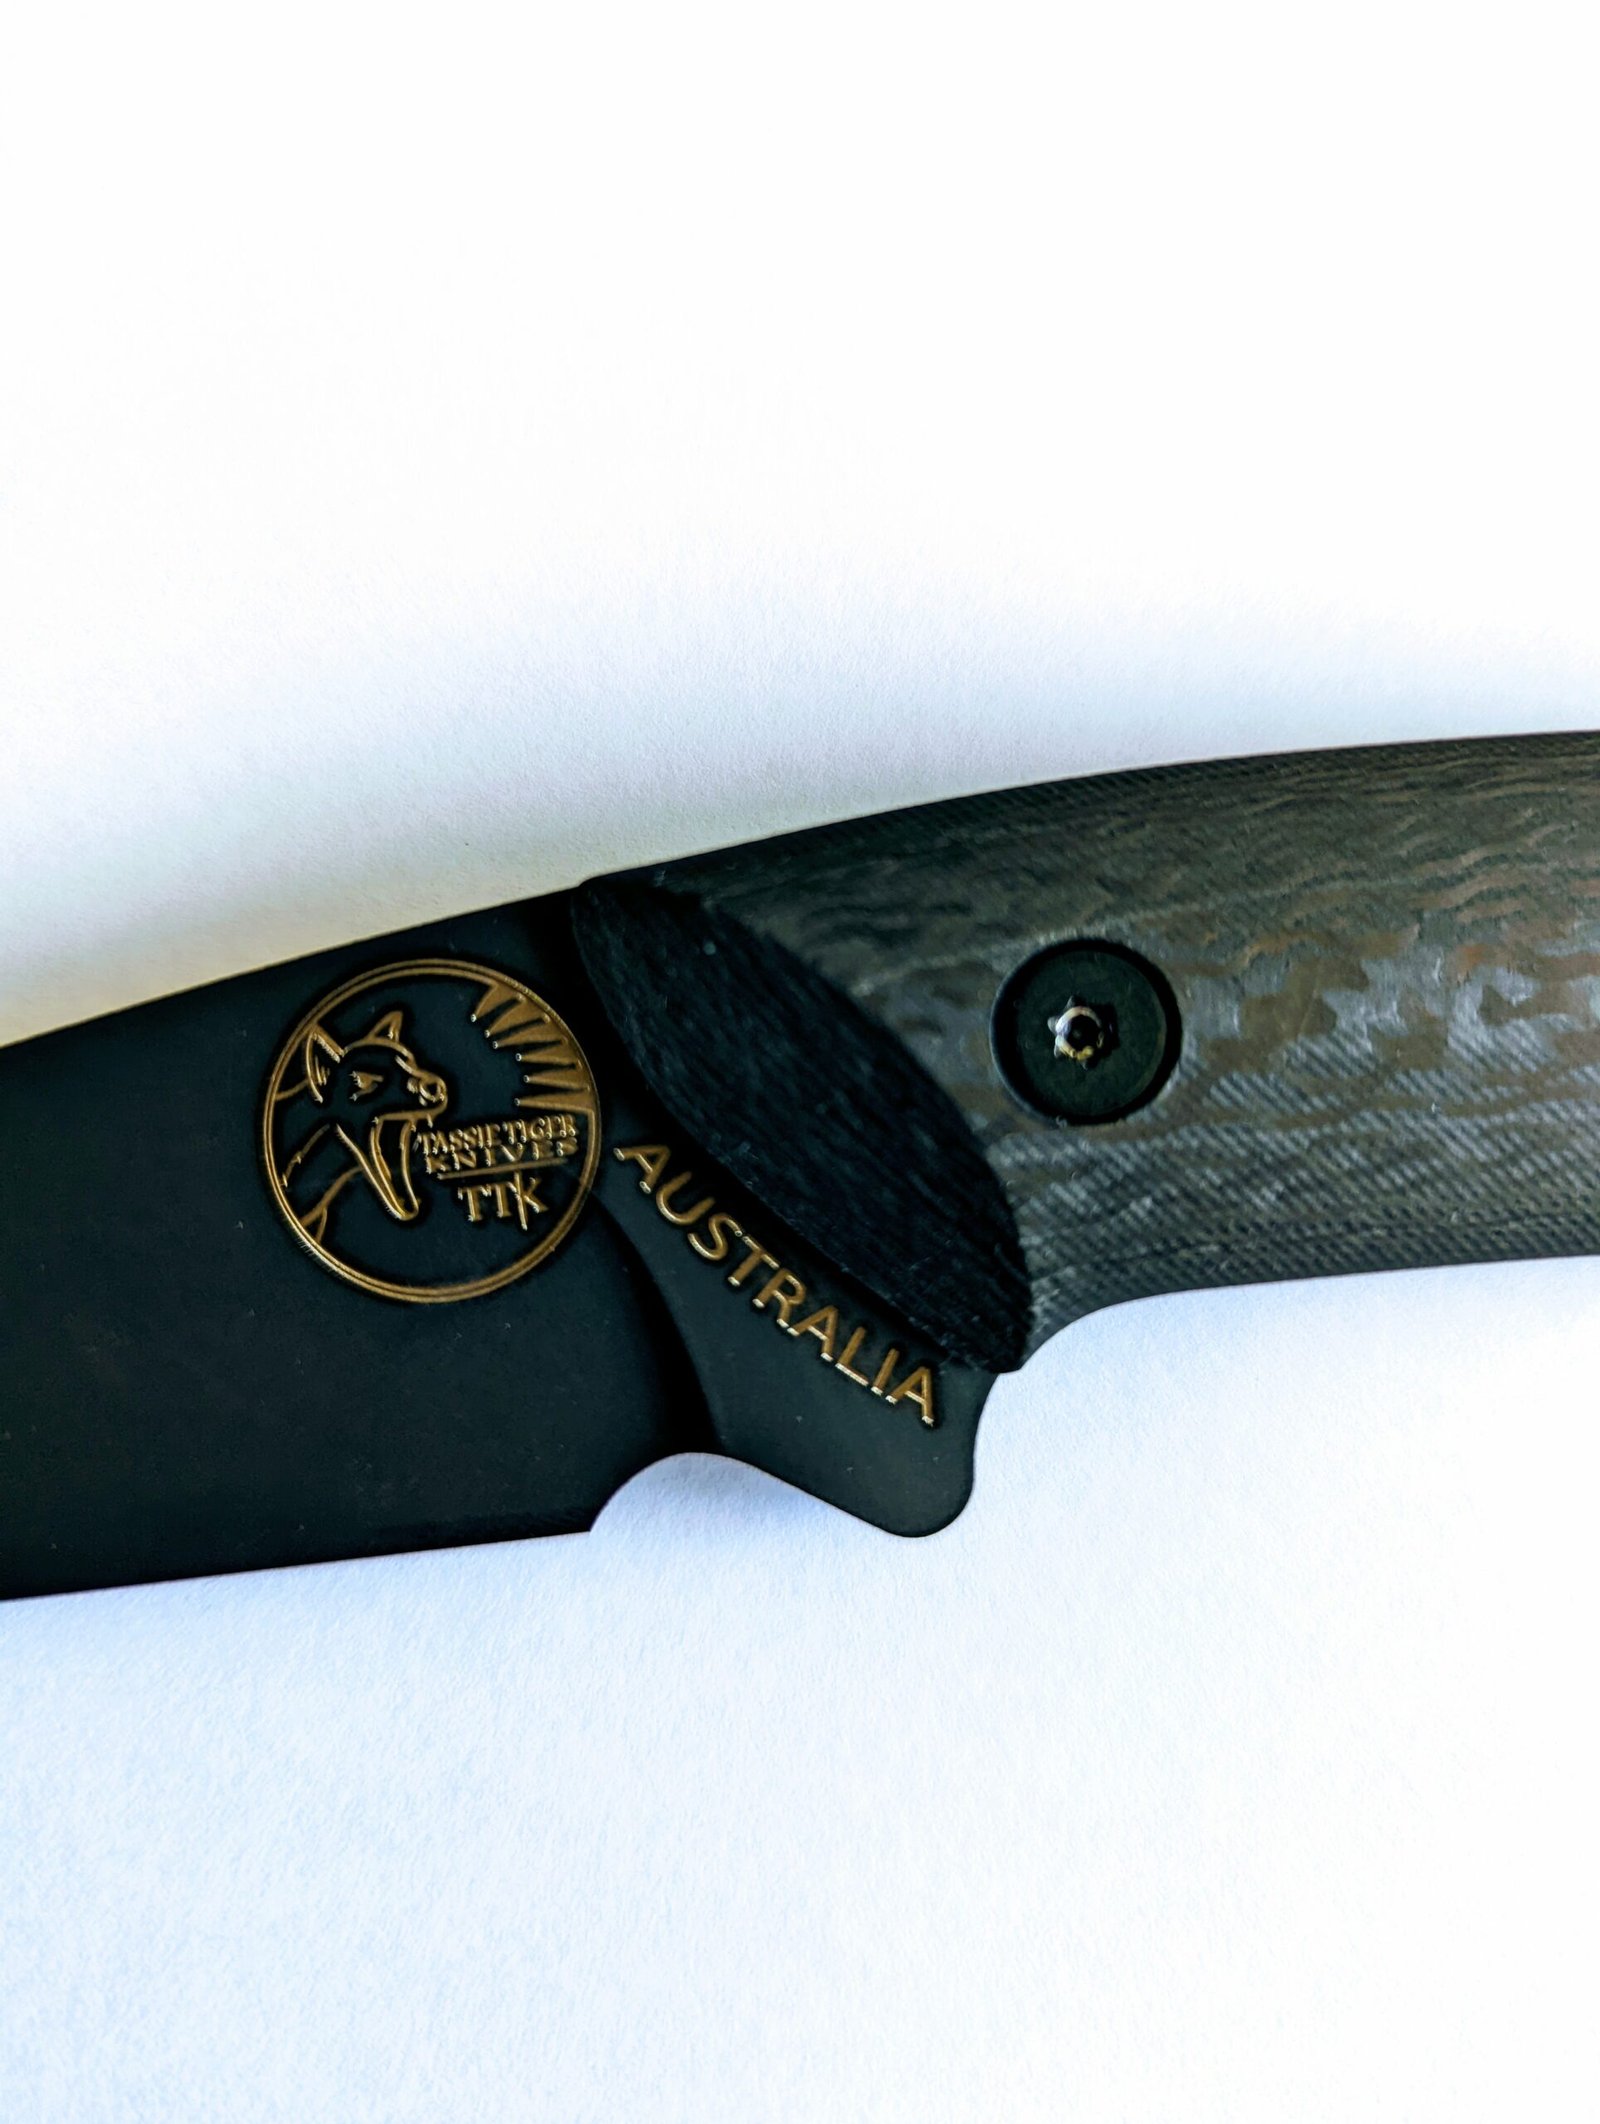 Australian Made Fixed Blade Skinning Knife – Black Carbon Fibre Handle